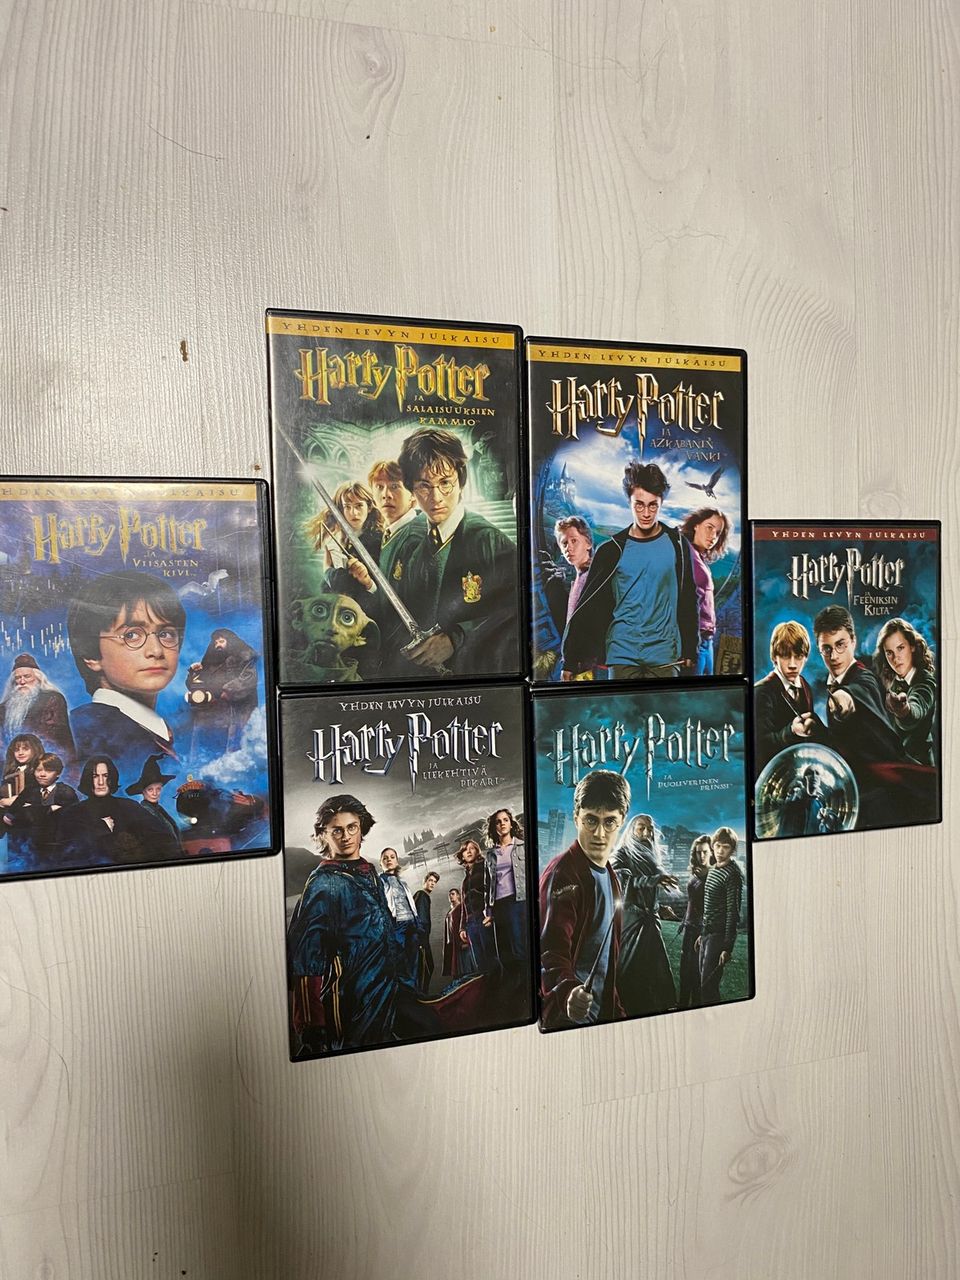 HarryPotter dvd